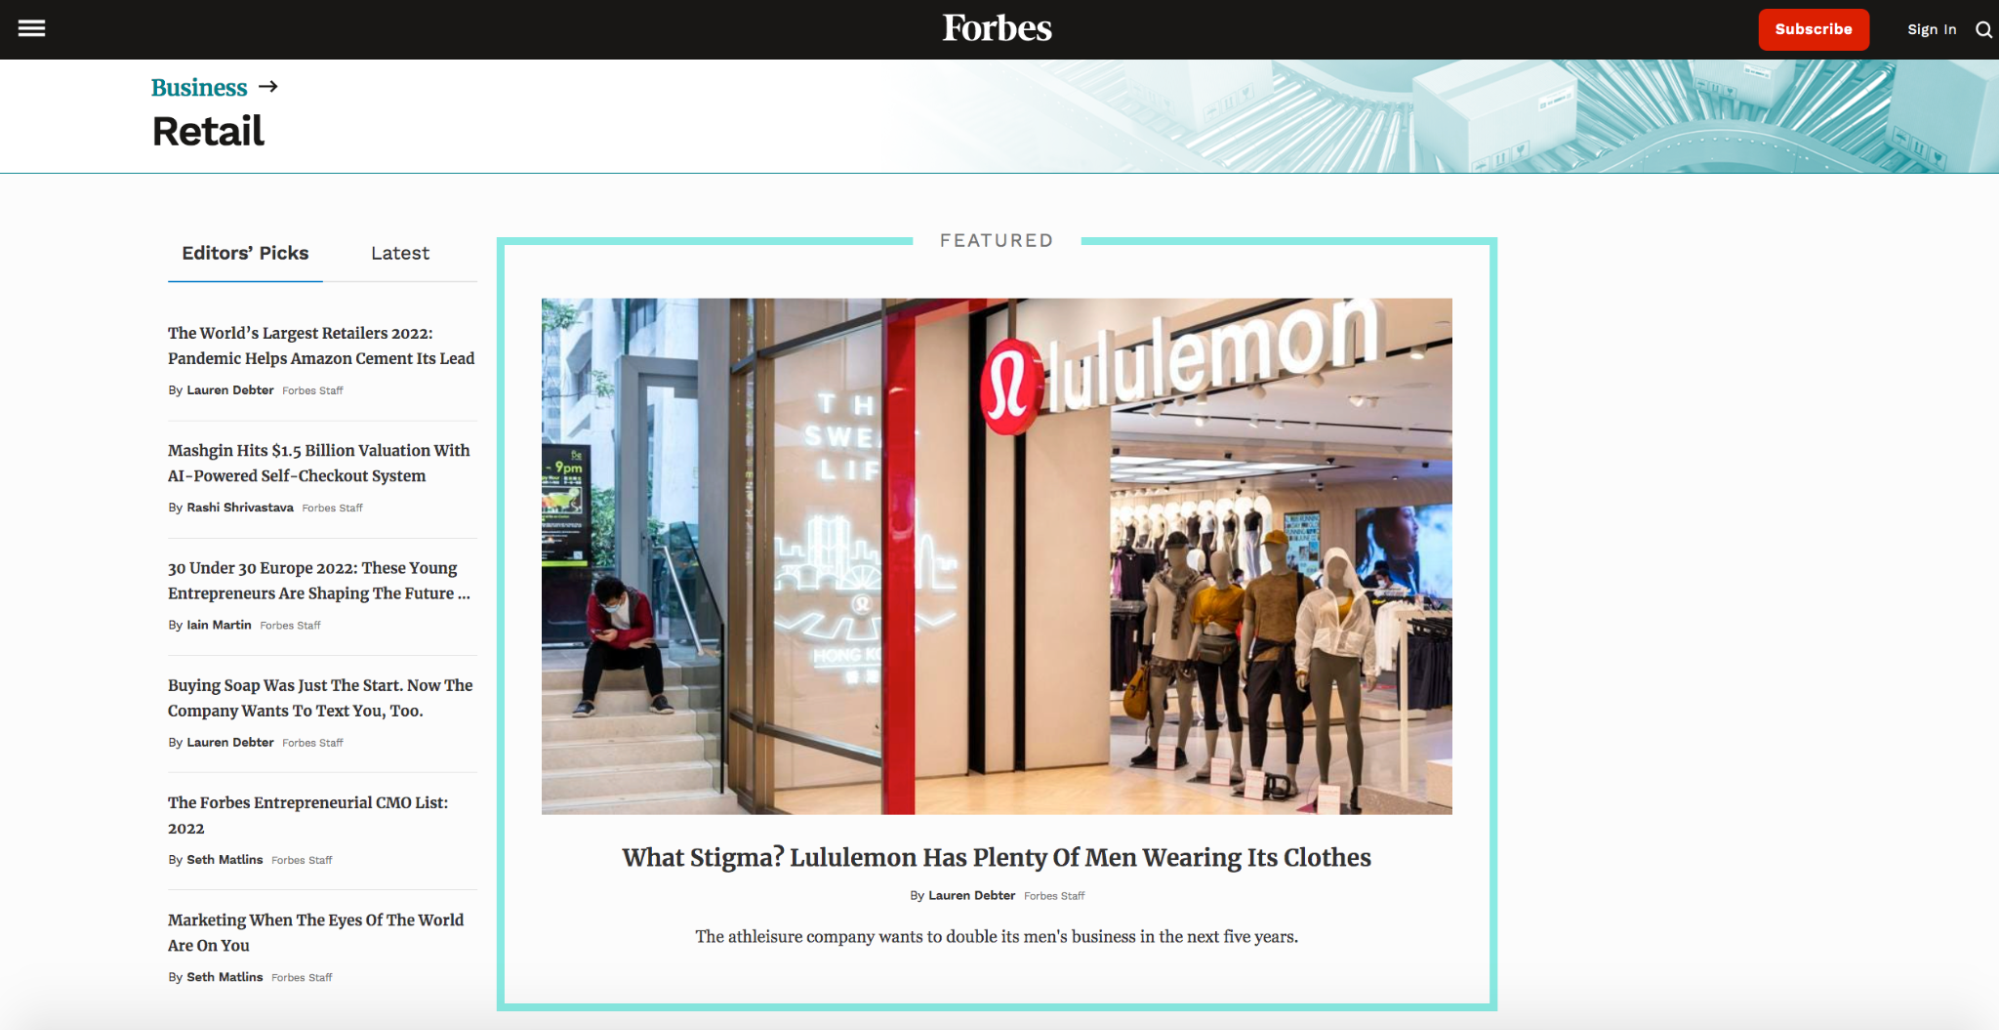 Forbes Retail online retail publication